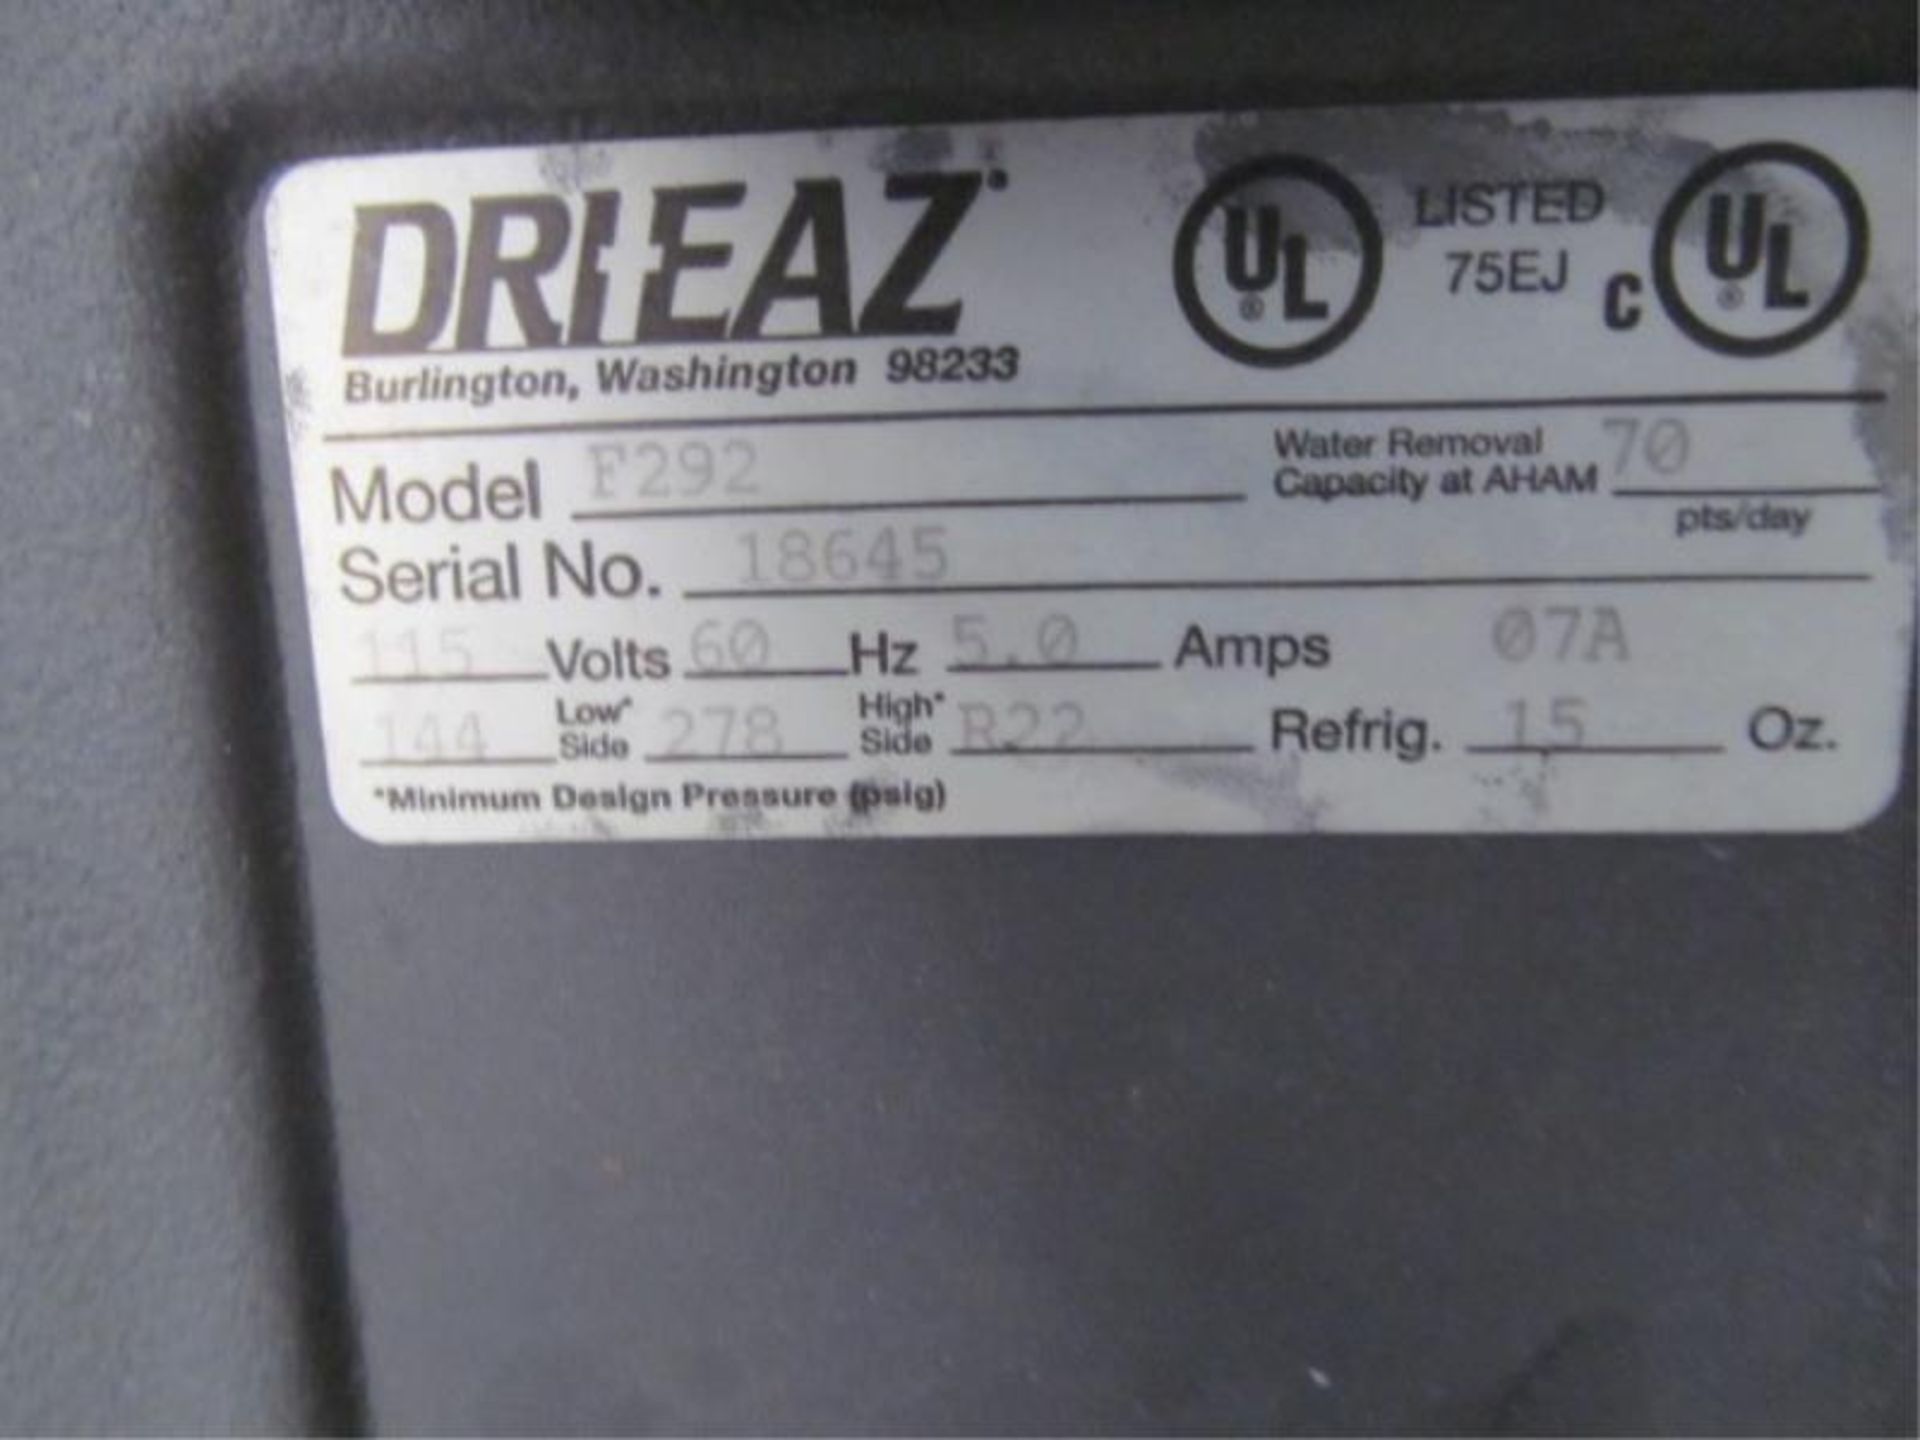 Dehumidifier, Drieaz Evolution LGR, Model: F292, - Image 3 of 3